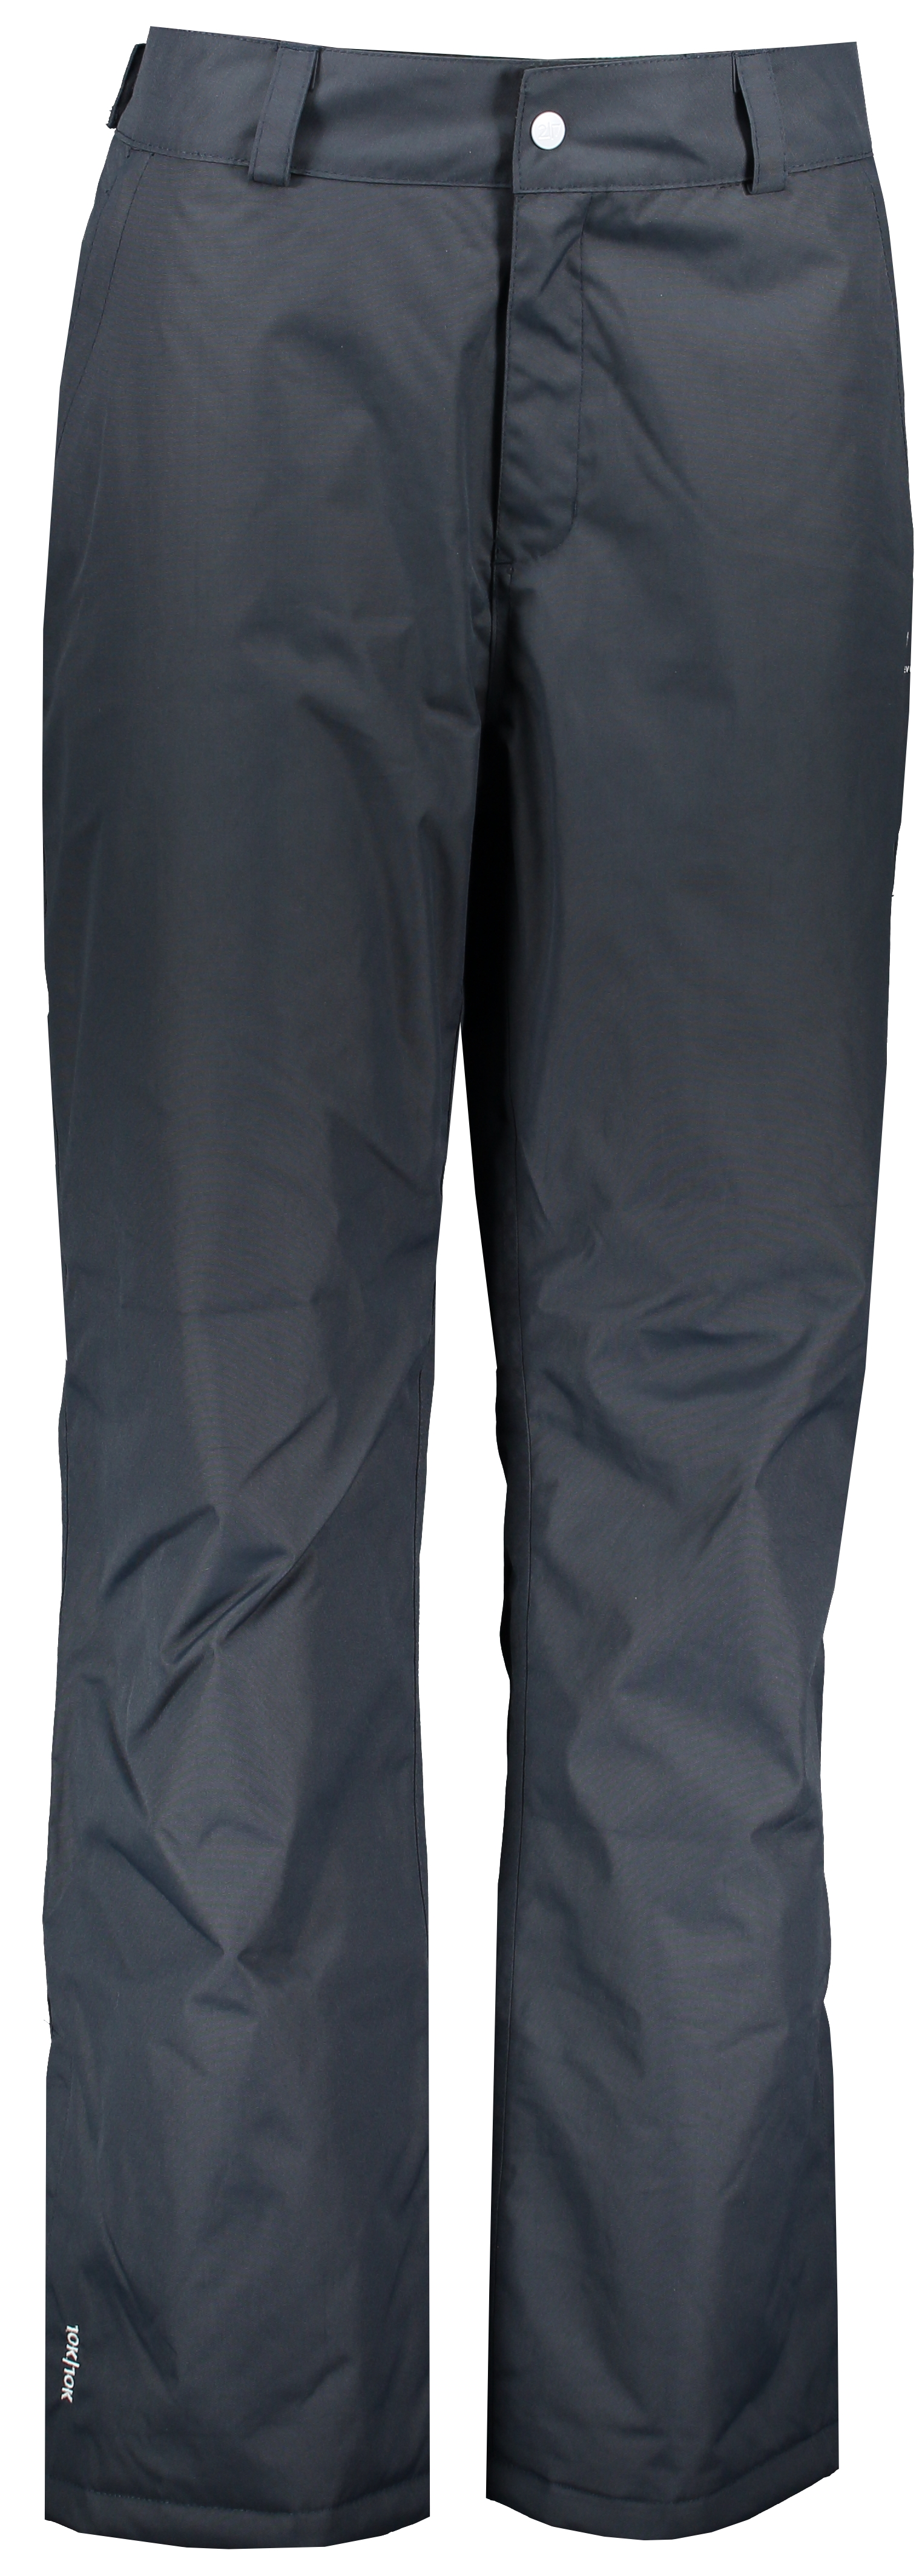 TÄLLBERG - Men's Winter Ski Trousers - Ink (gray-black)